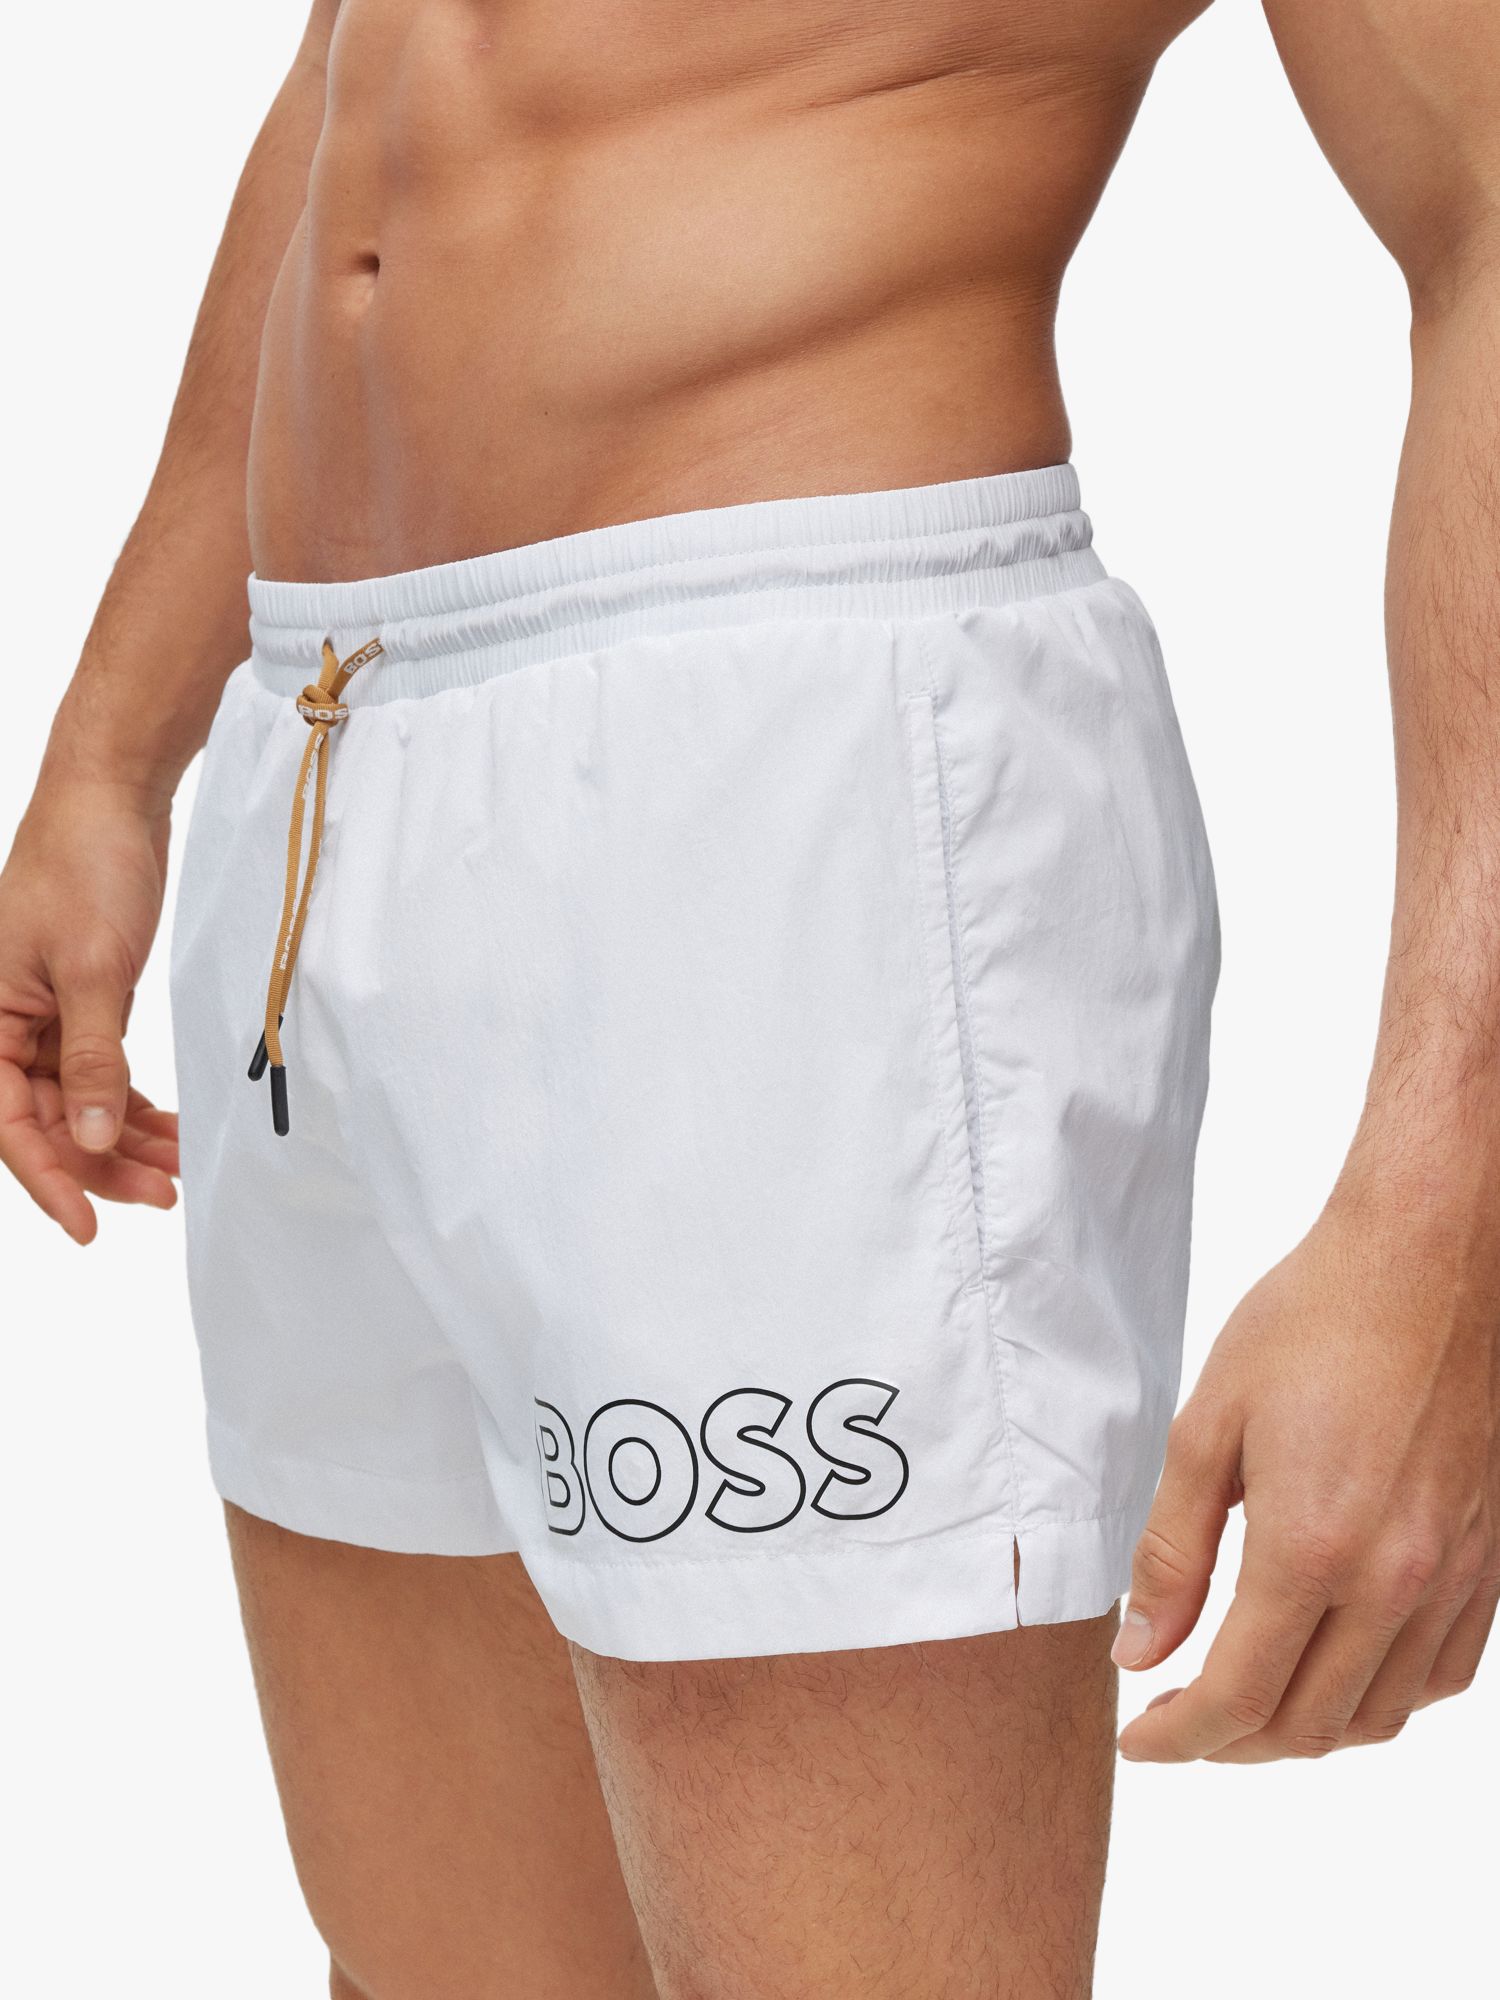 BOSS Mooneye Swim Shorts, White, L